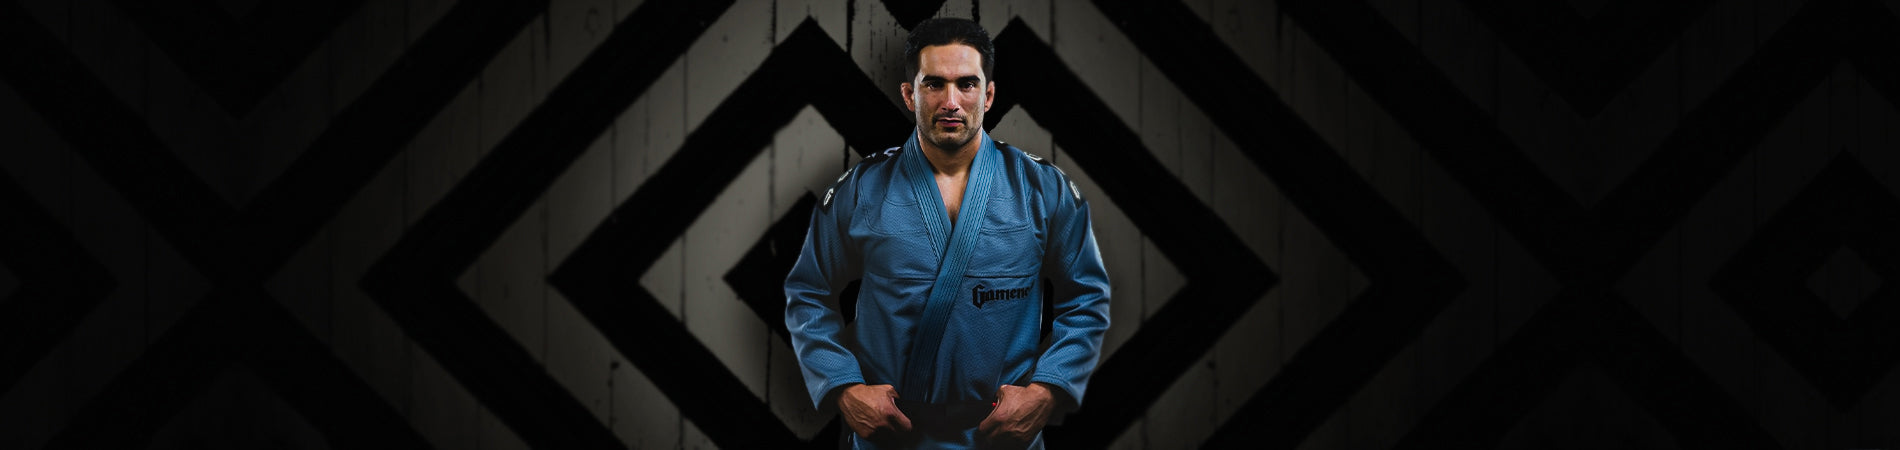 Manuel “Manny” Diaz – A Pro BJJ World Champion